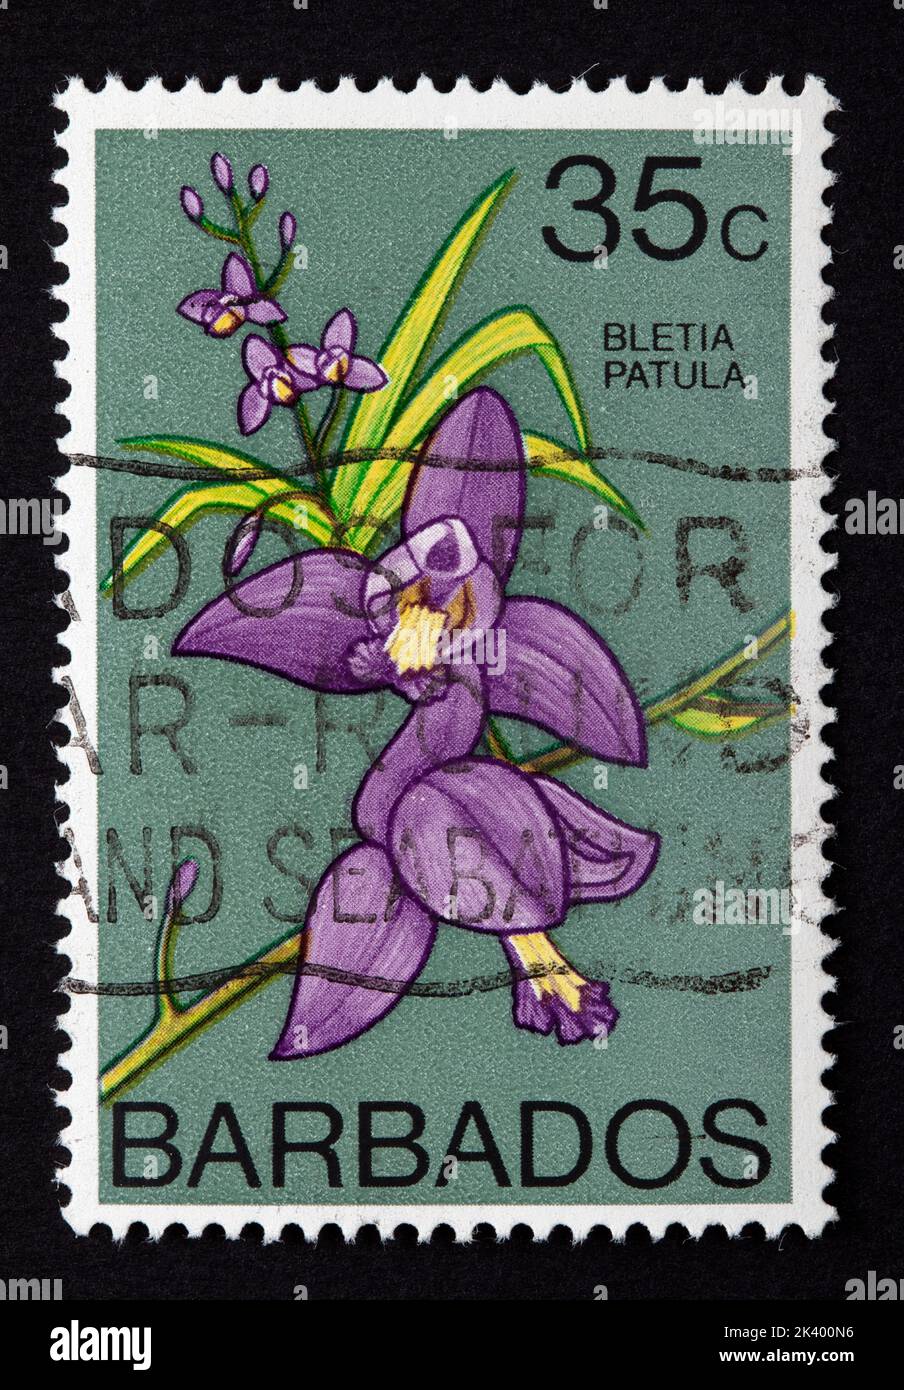 Barbados postage stamp Stock Photo